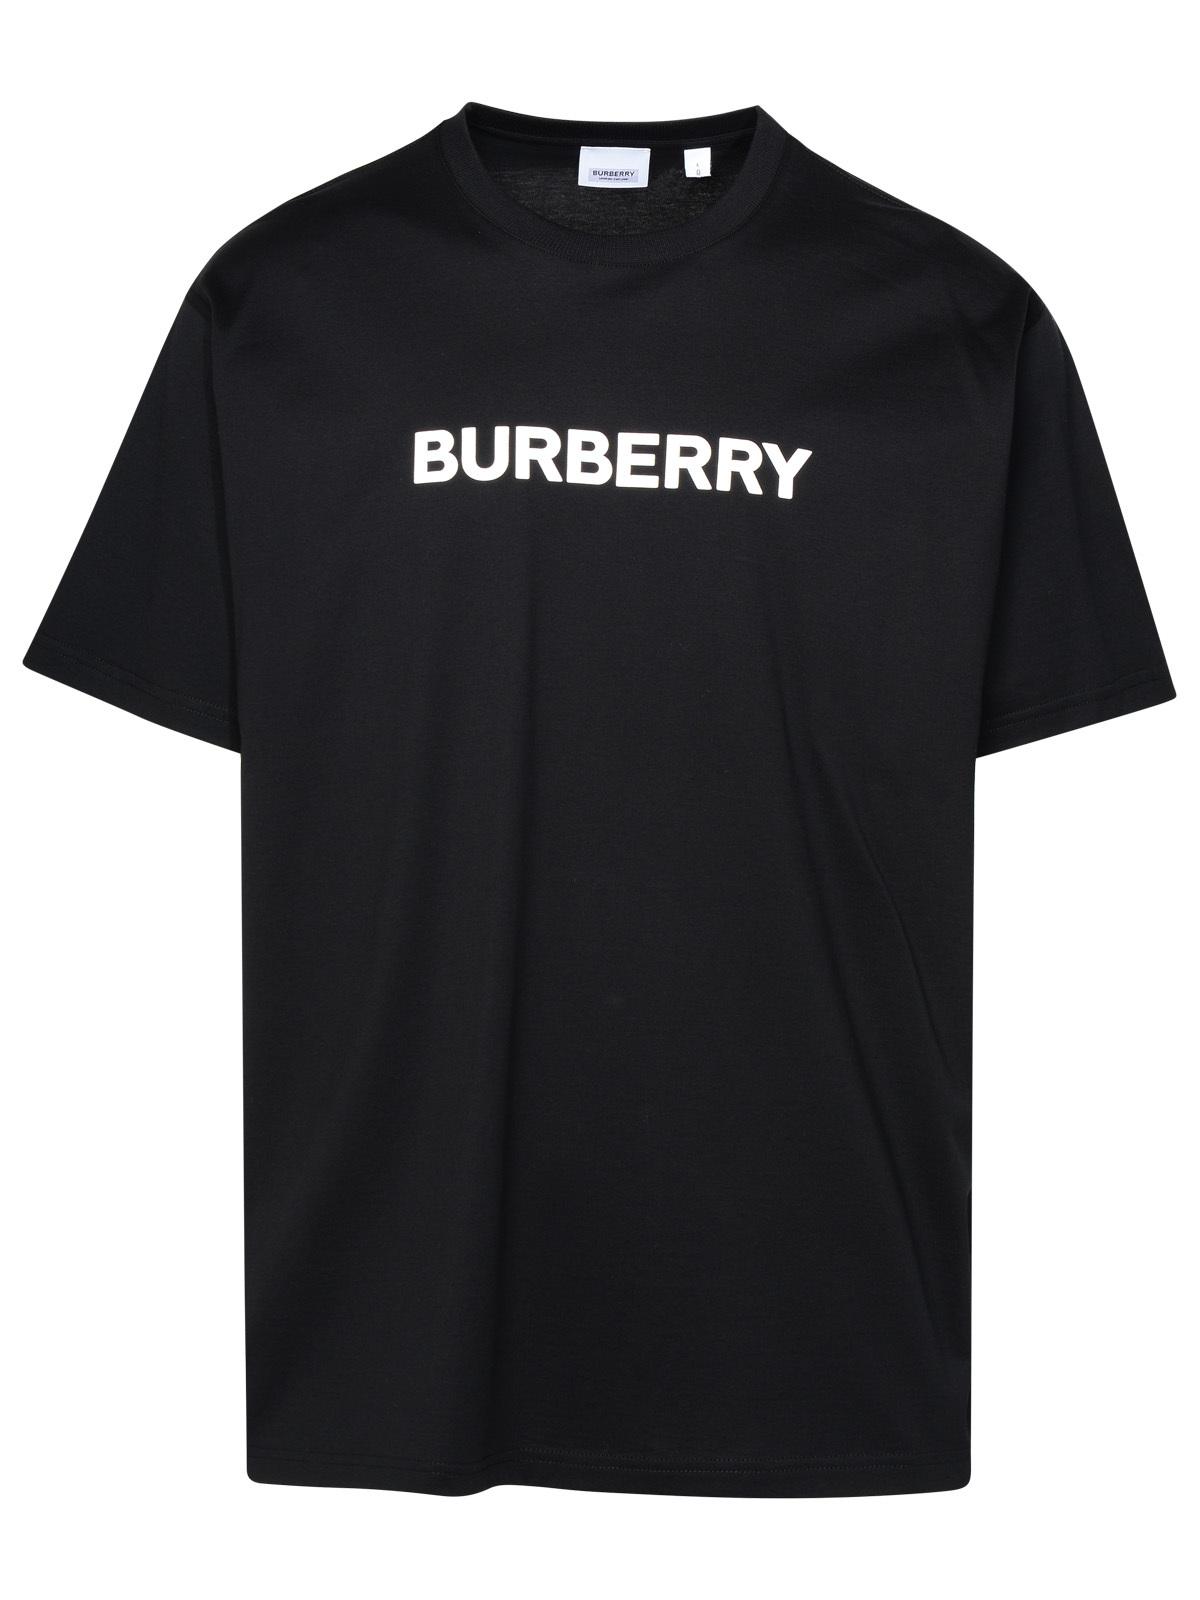 Burberry Black Cotton T-shirt Man